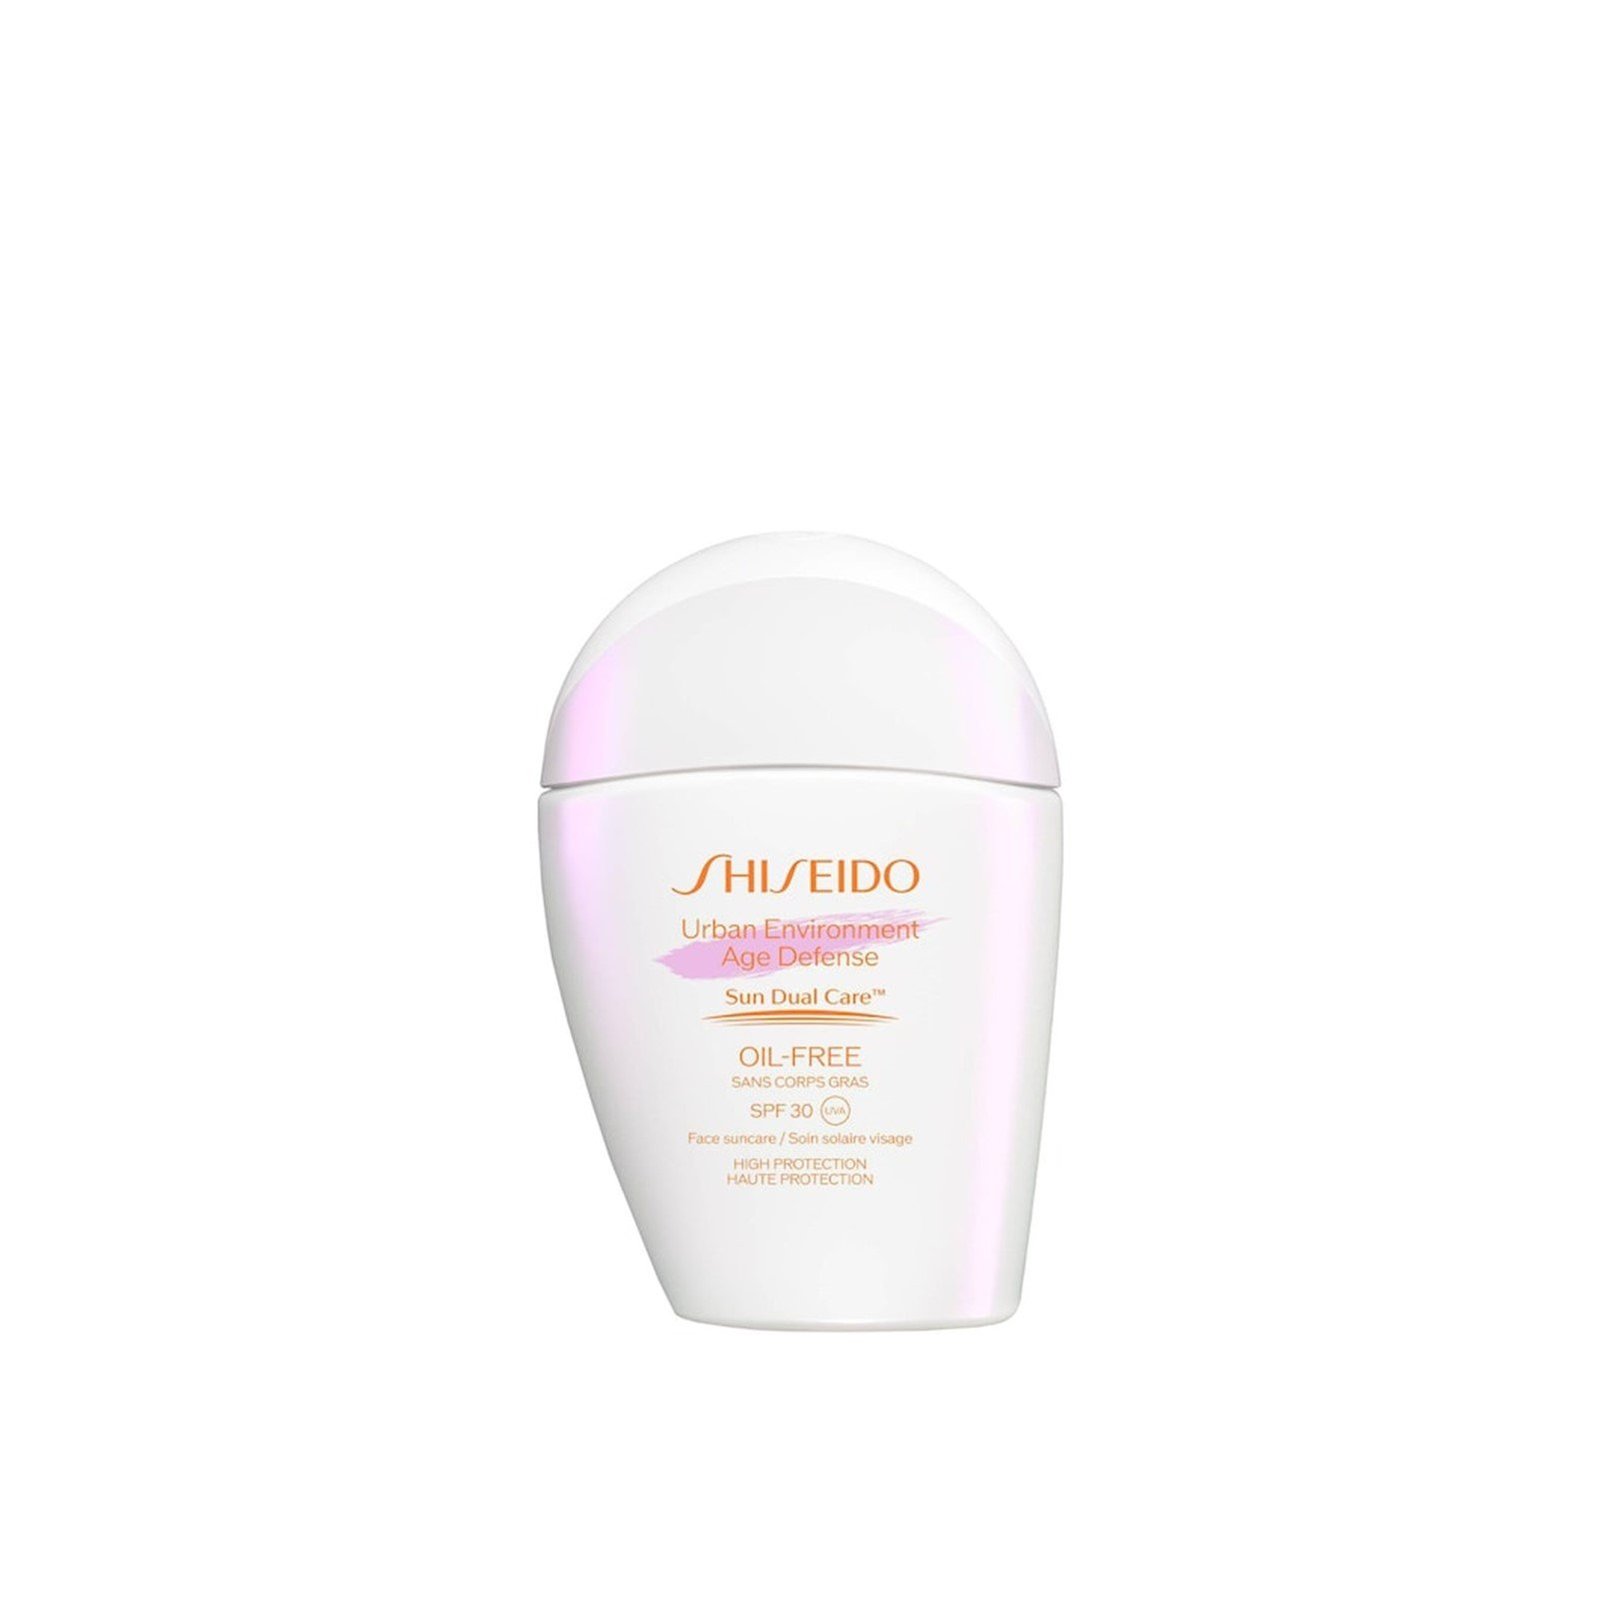 Shiseido Urban Environment Age Defense Oil-Free Face Suncare SPF30 30ml (1.01floz)